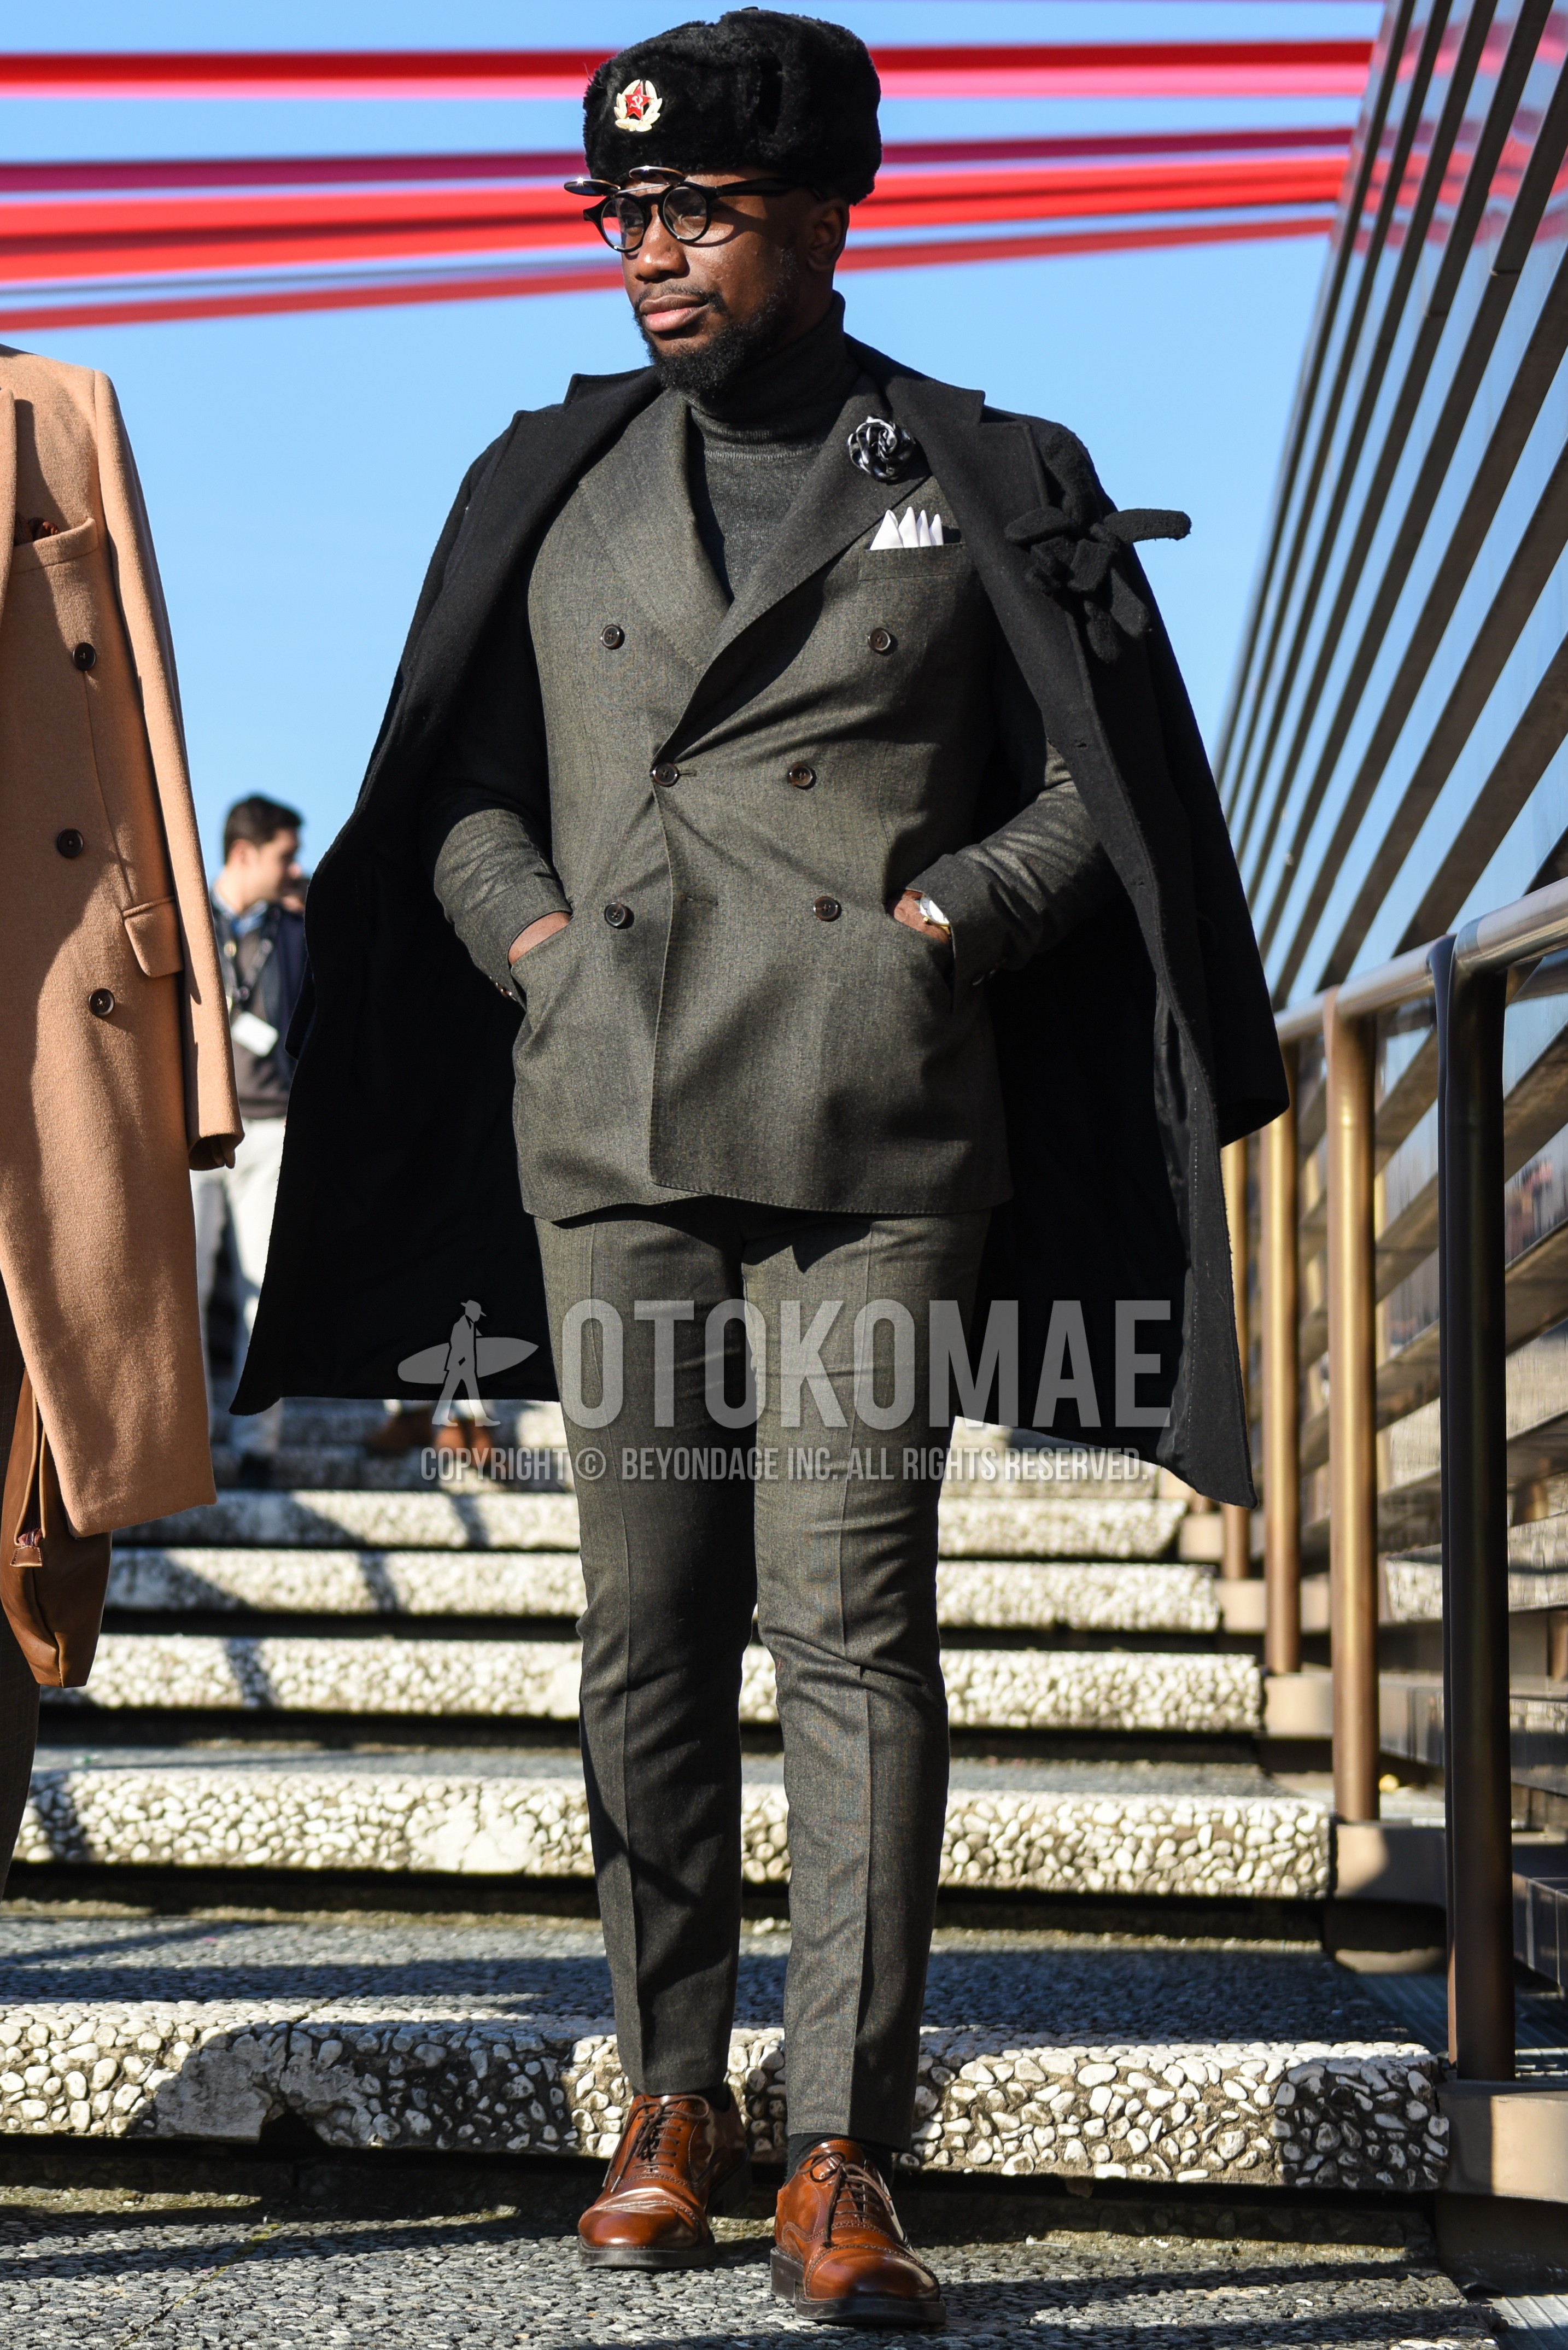 Men's autumn winter outfit with black one point cap, black plain chester coat, gray plain turtleneck knit, dark gray plain socks, brown wing-tip shoes leather shoes, gray plain suit.